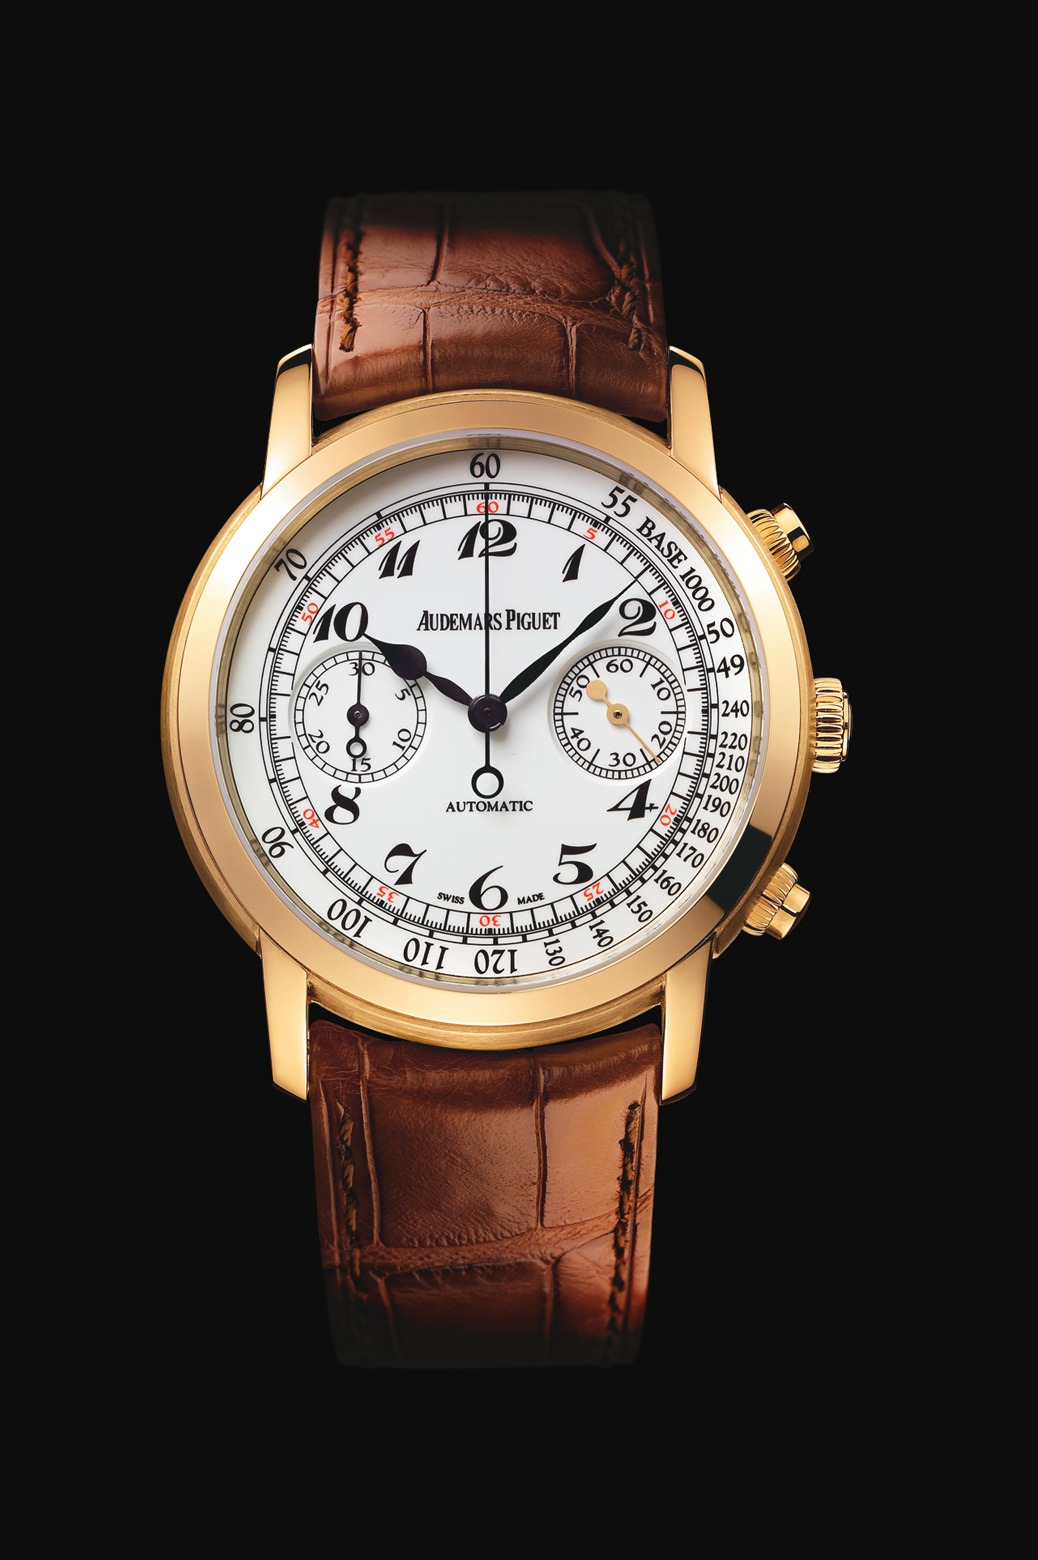 Audemars Piguet Jules Audemars Chronograph Pink Gold watch REF: 26100OR.OO.D088CR.01 - Click Image to Close